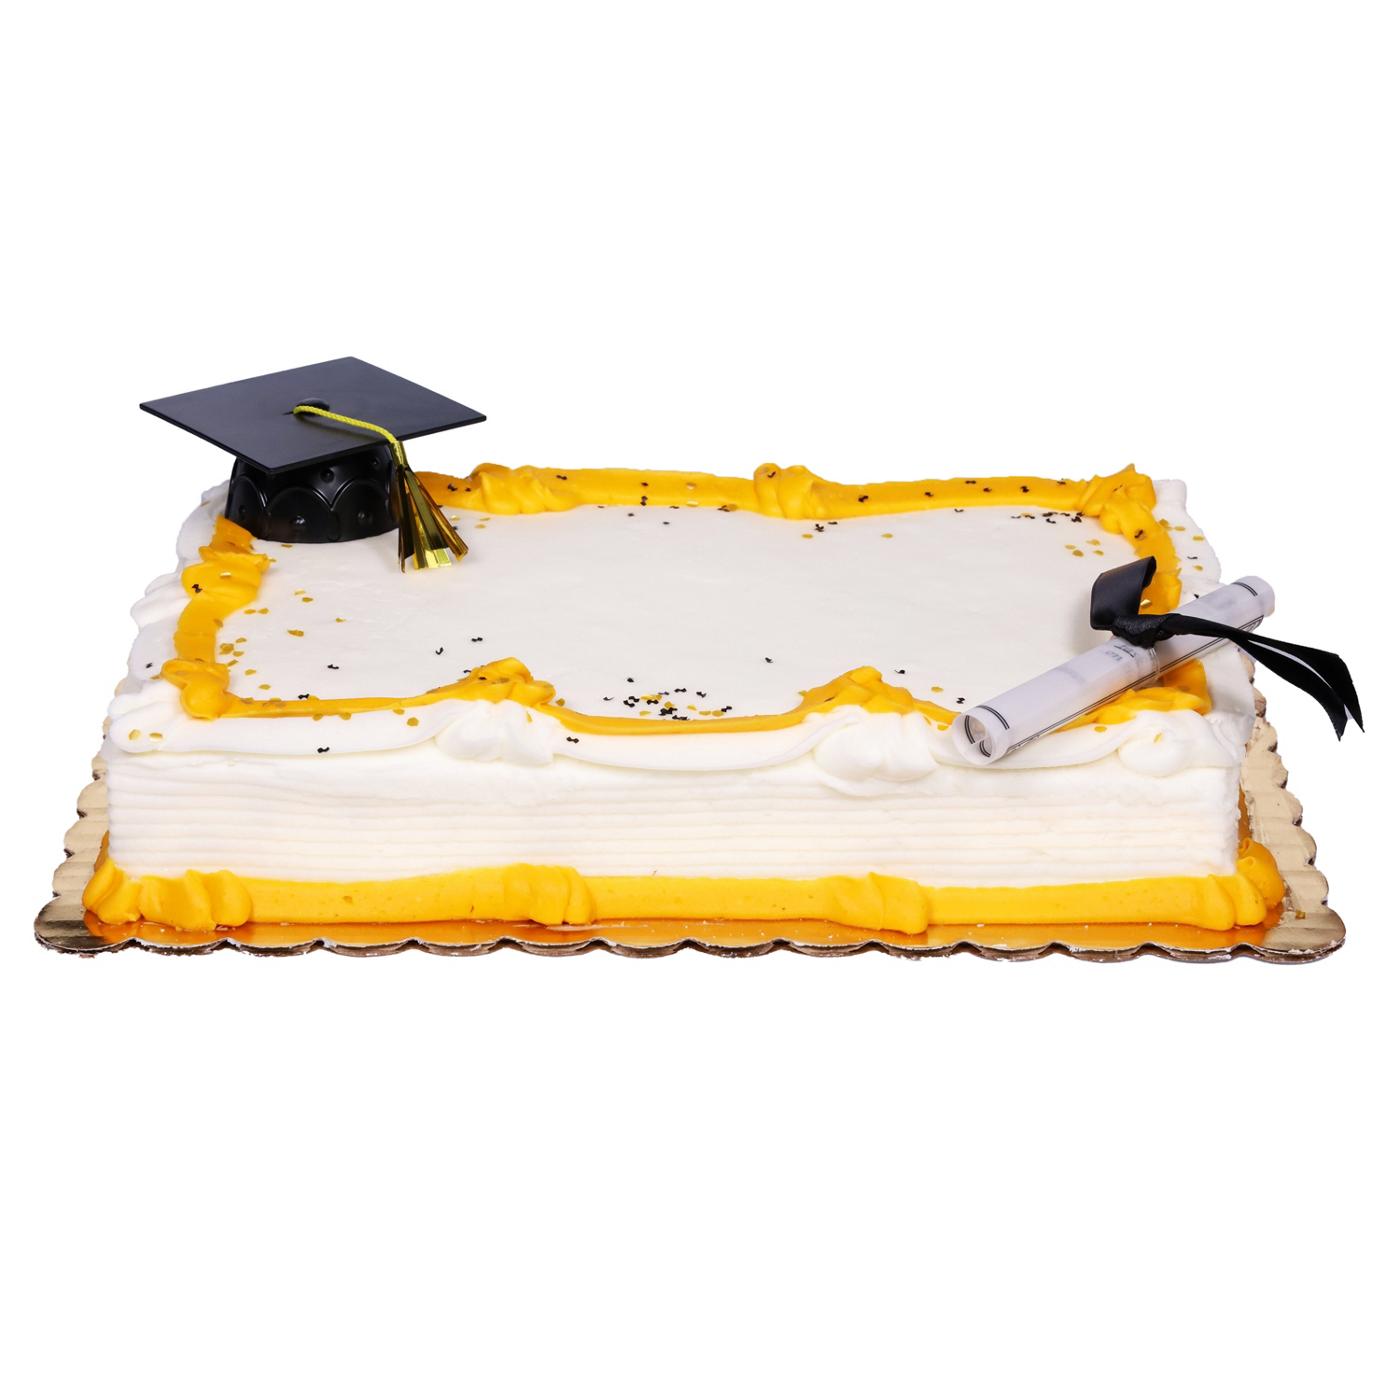 BakerMaid Graduation Buttercream Chocolate Cake; image 1 of 2